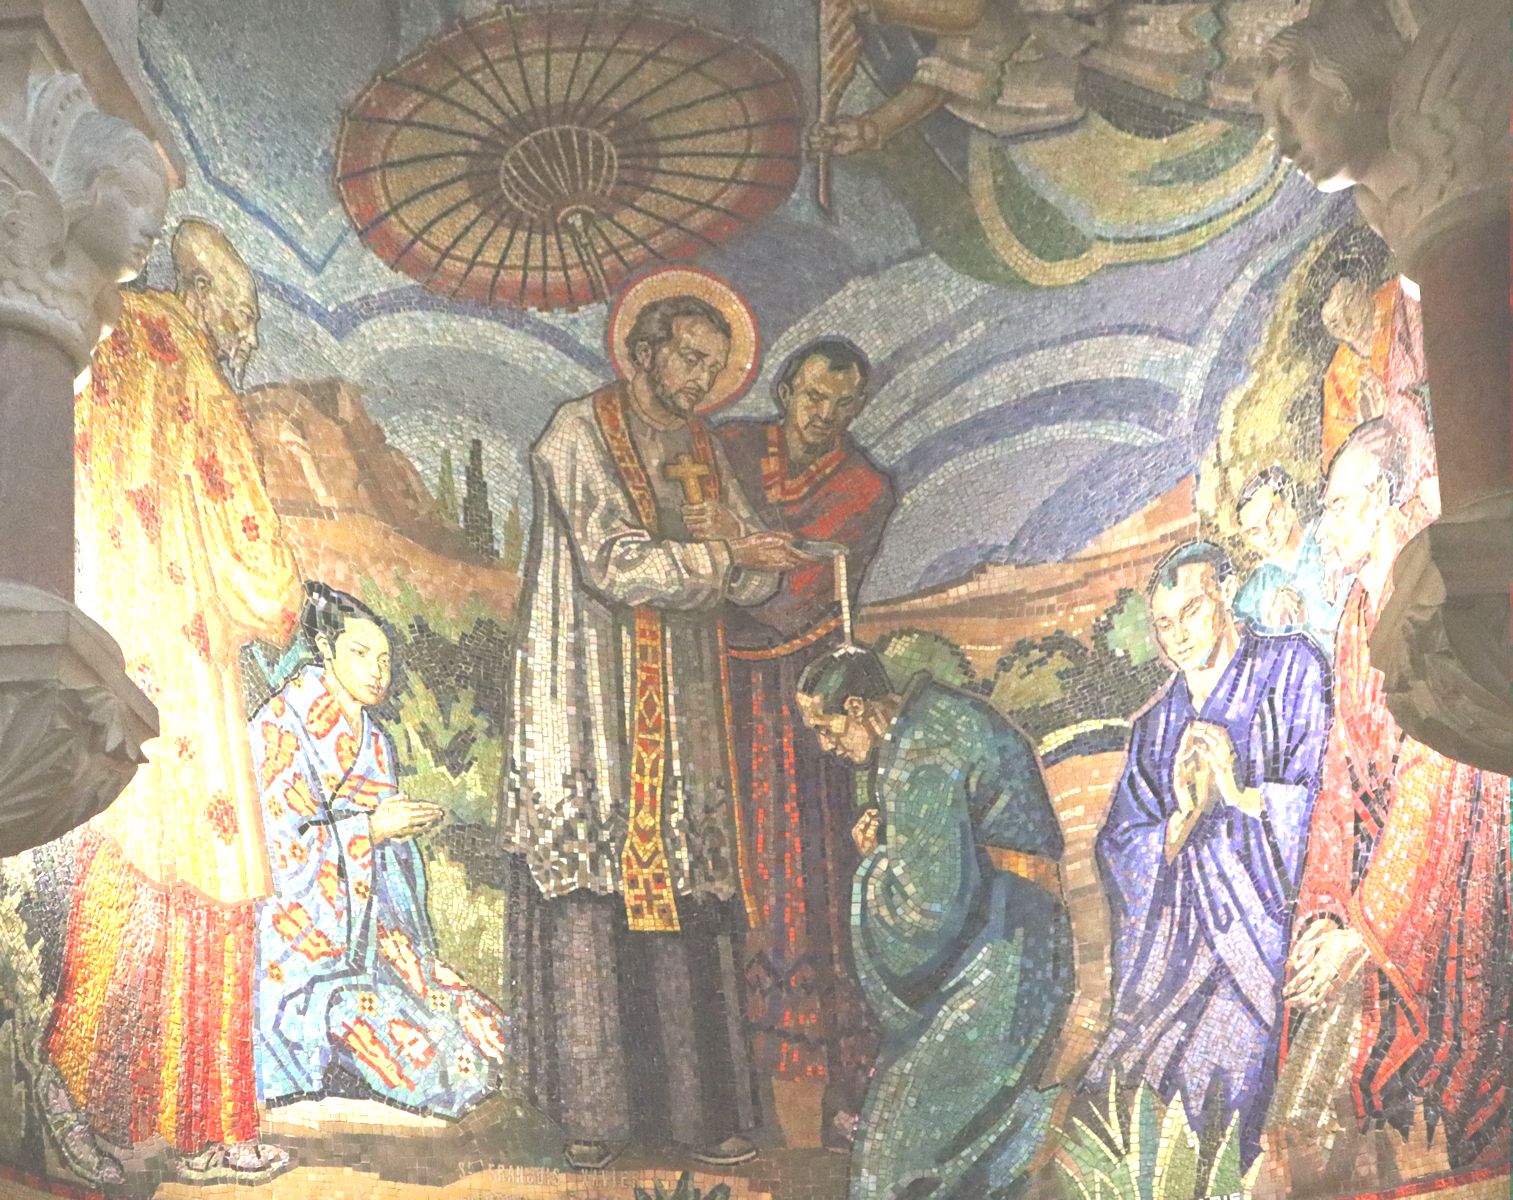 Atelier Mauméjean: Franz Xaver tauft, Mosaik, 1930, in der Claudius de la Colombière geweihten Kapelle an der ehemaligen Niederlassung der Jesuiten in Paray-le-Monial